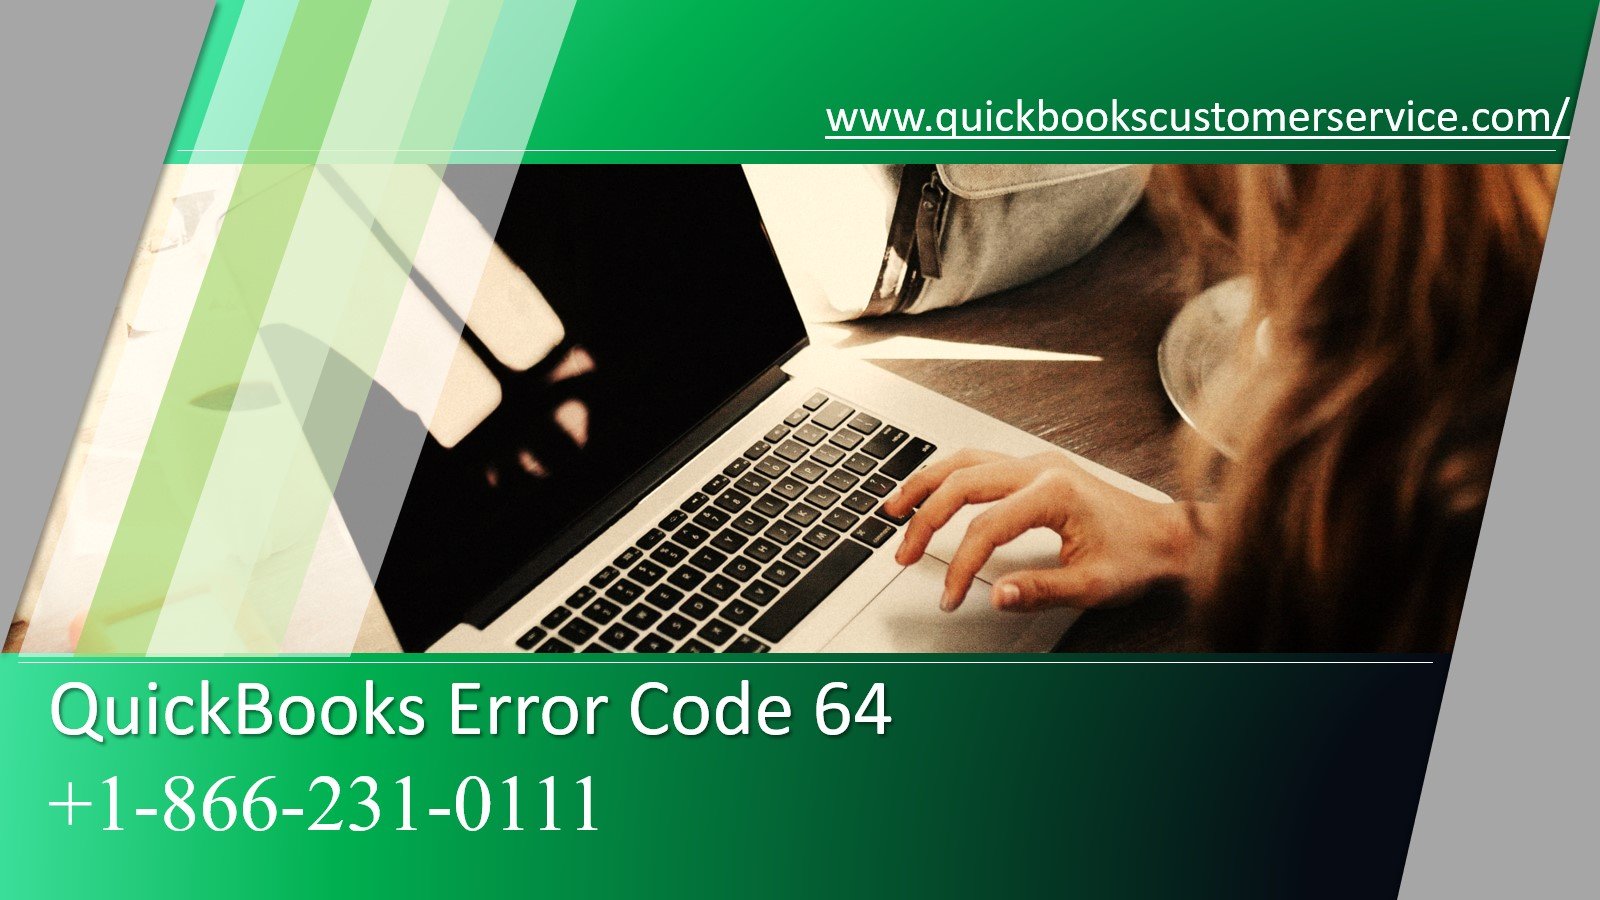 HOW TO RESOLVED QUICKBOOKS ERROR CODE 64?